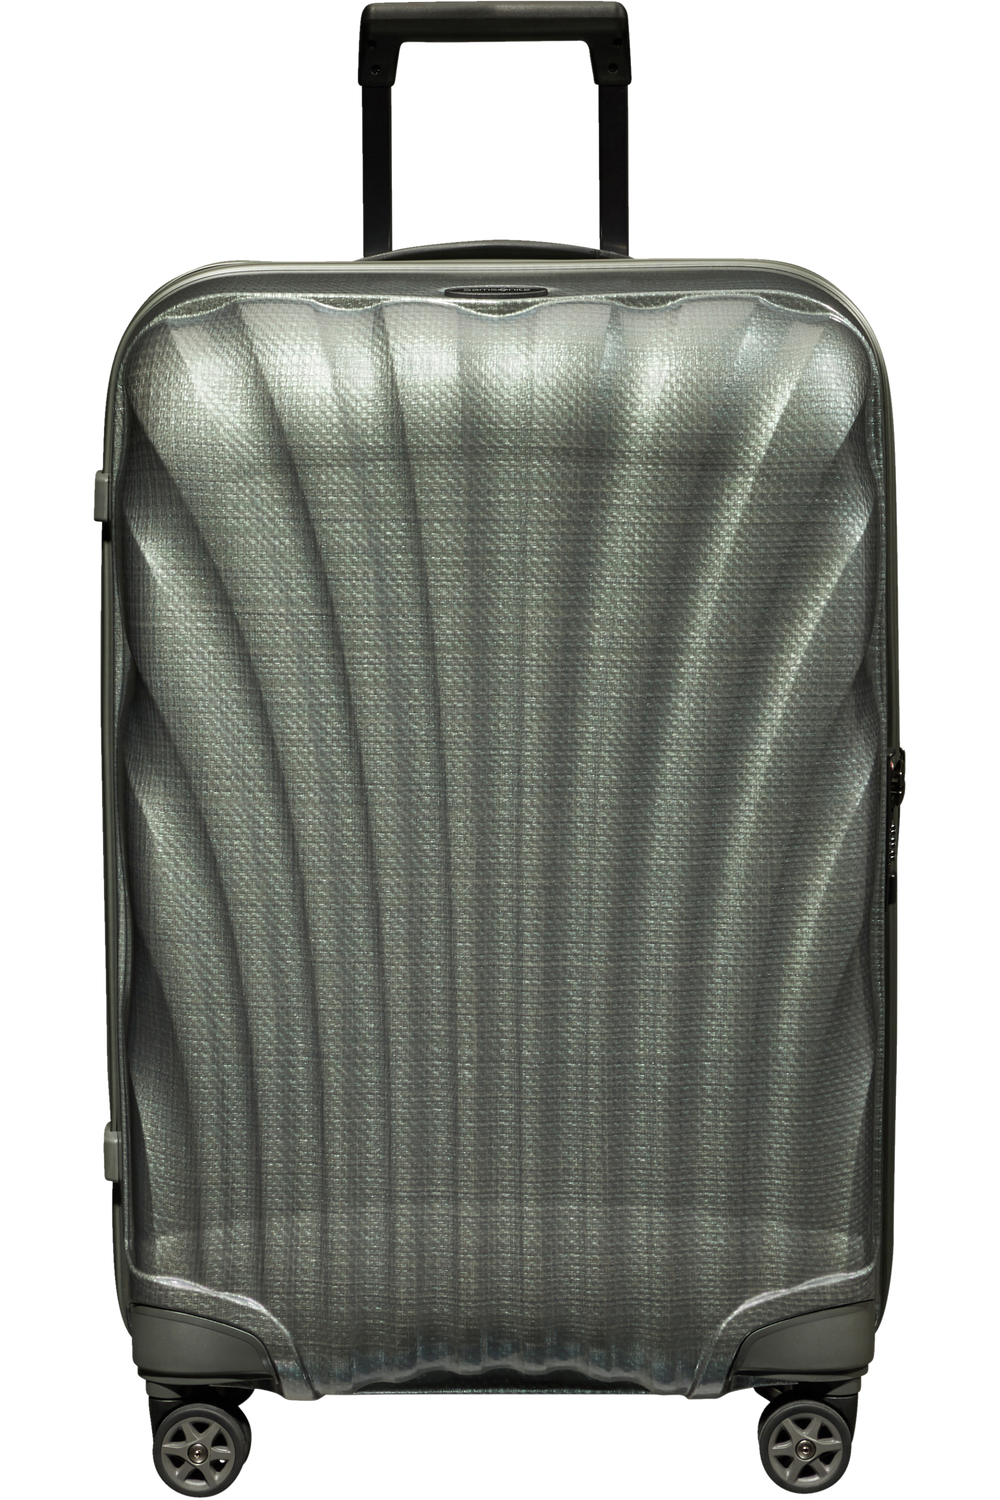 Koffert | Curv materiale | Medium | Metalic Grønn | 4 Hjul | 2,5 Kg | 10 Års Garanti | C-LITE SPINNE